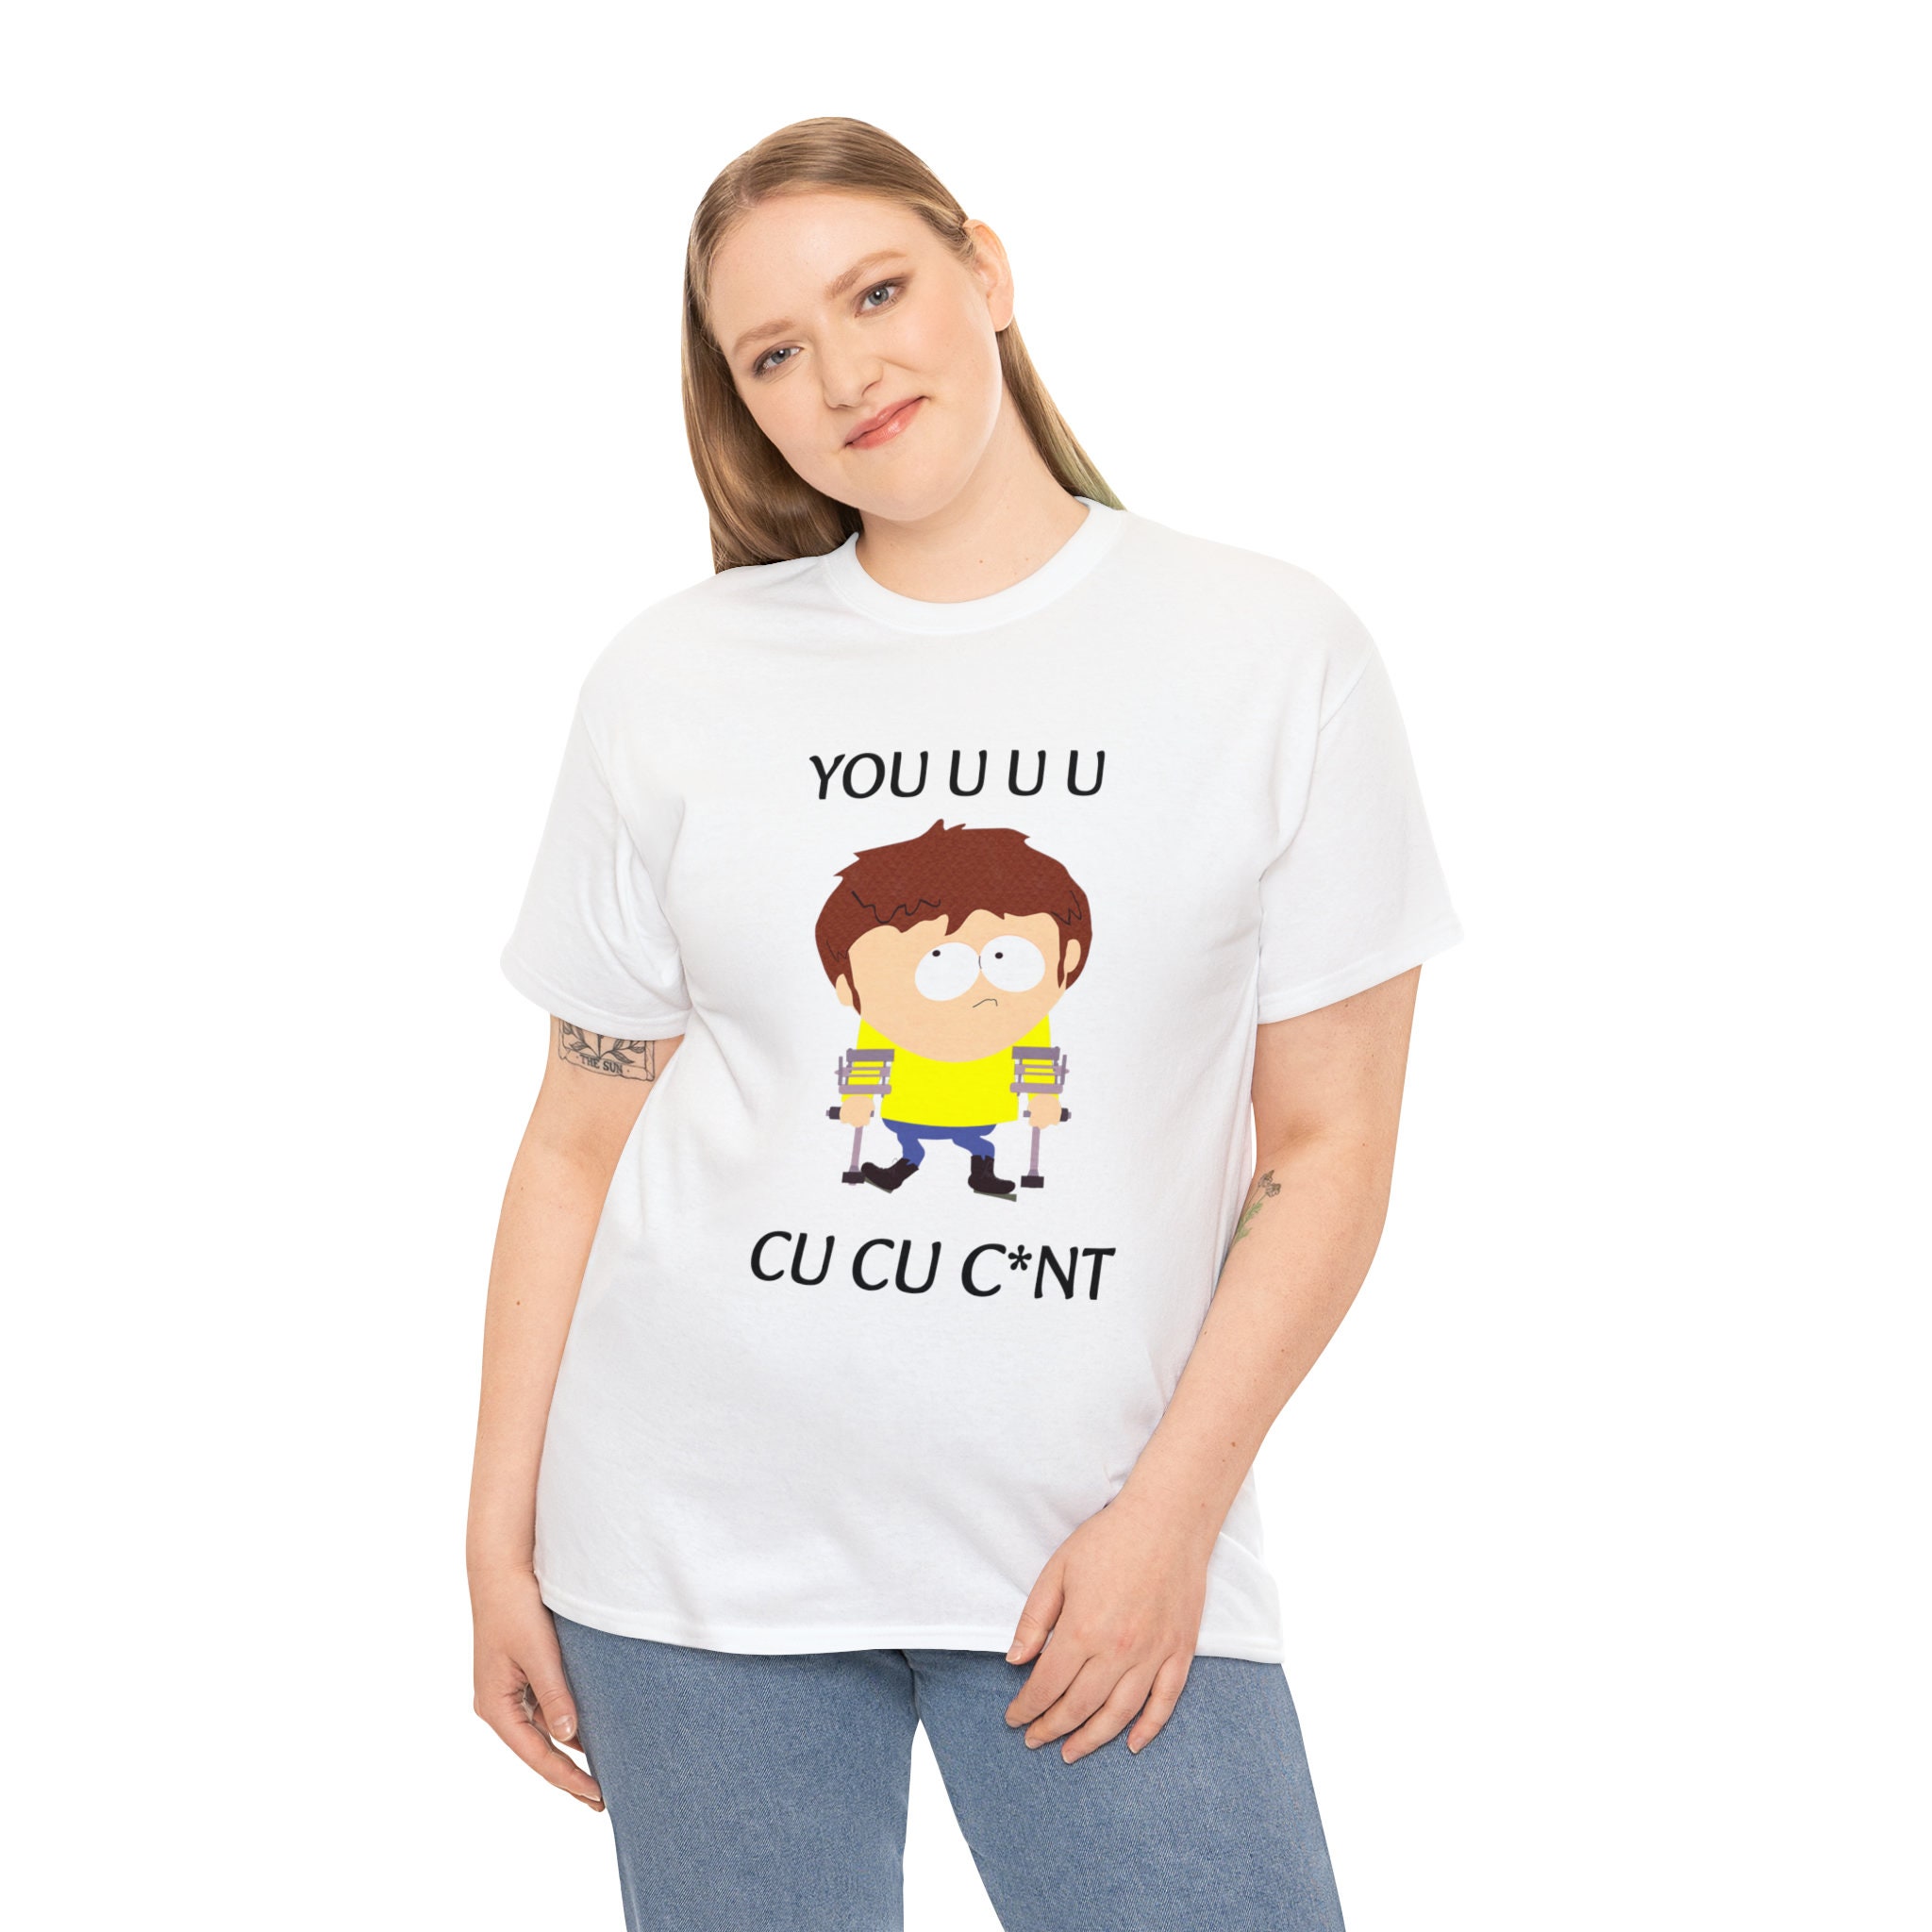 South Park Jimmy Valmer for Fans Gift U Etsy Show Cu - Cunt Southpark Tee for Shirt TV Tee You Fans U Cu U Unique Funny